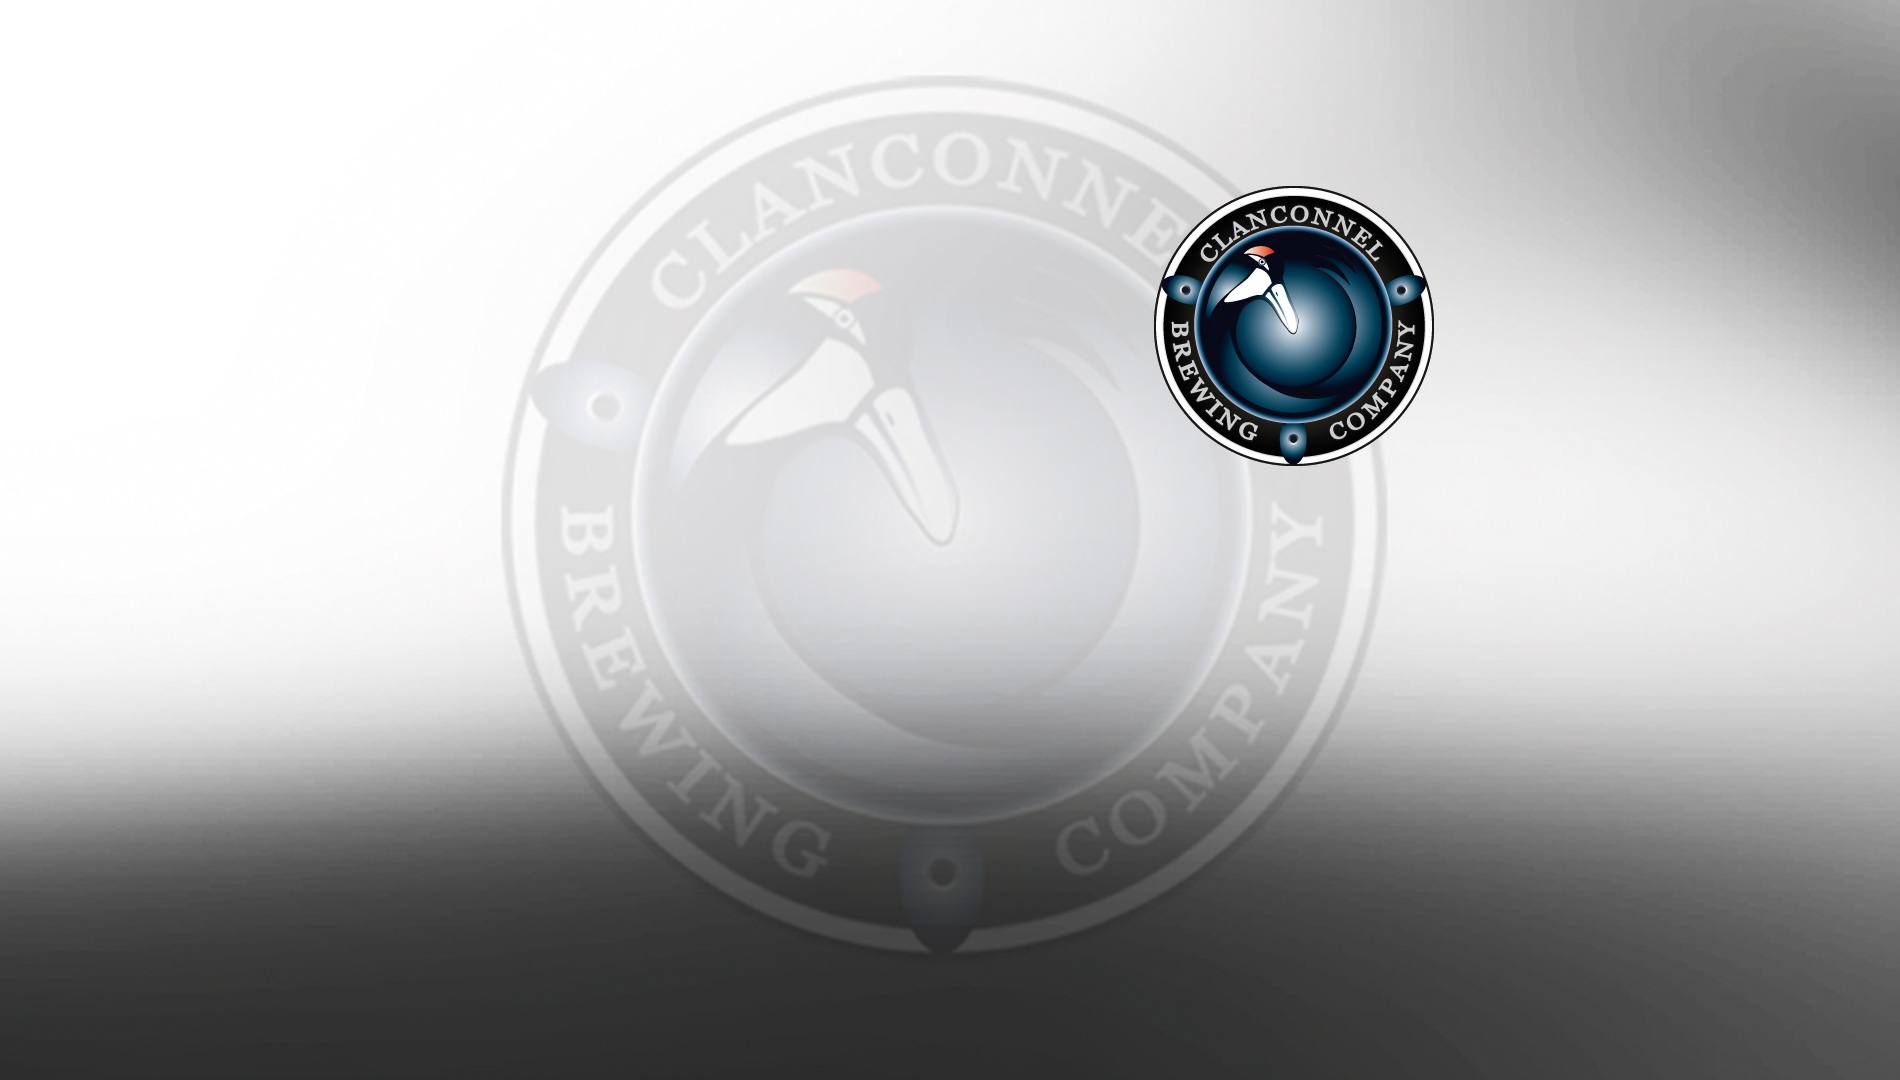 Clanconnel Brewing Company logo